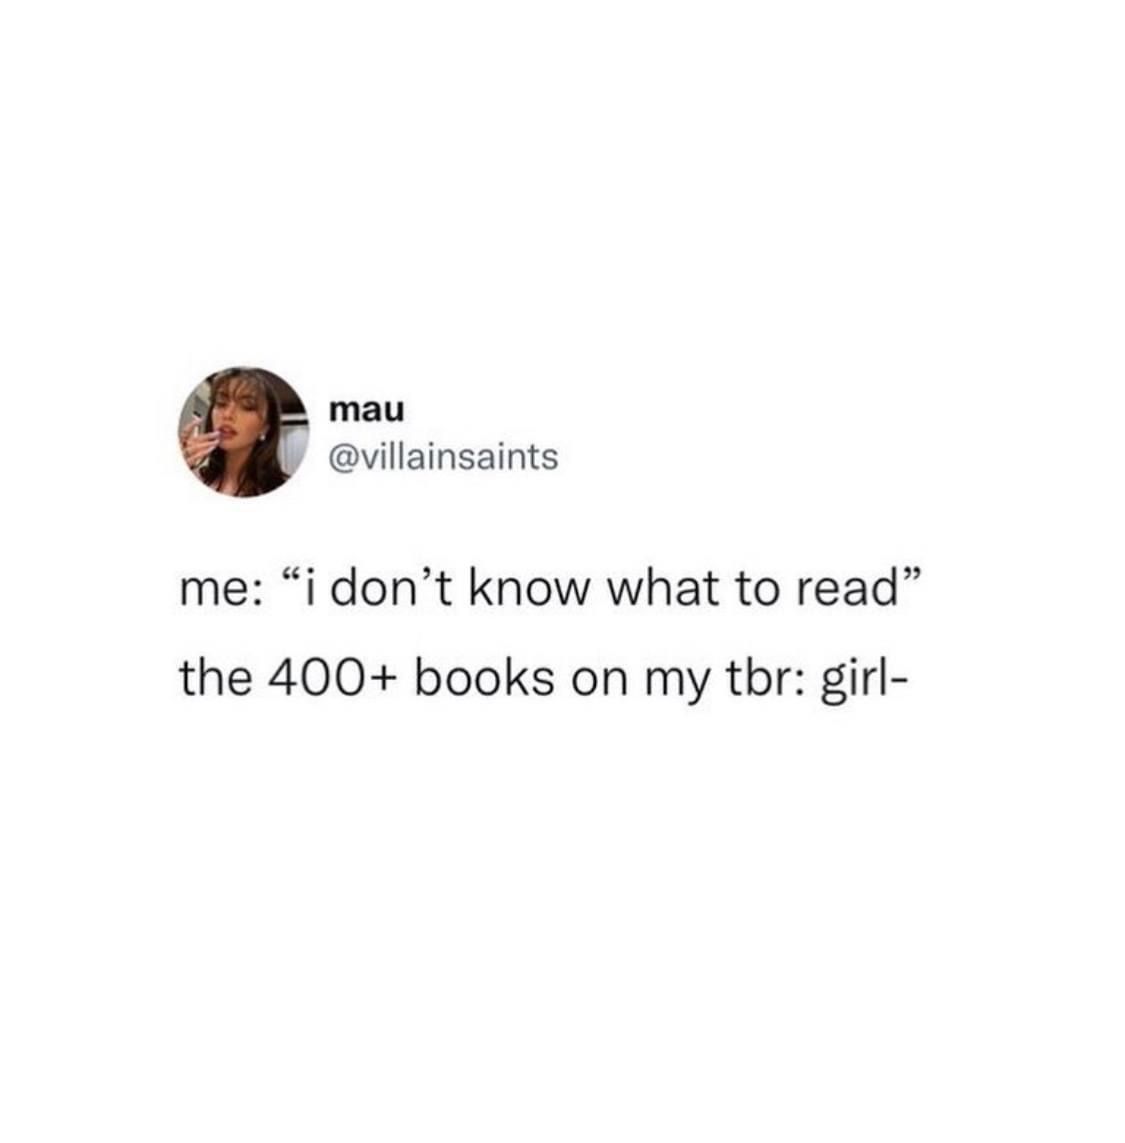 Don't look at me like that! 😬
#bookworm #readingrocks #welovebooks #ratherbereading #goodbook #tbrpile #readingmemes #bookmemes #bookhumor #readingquotes ️